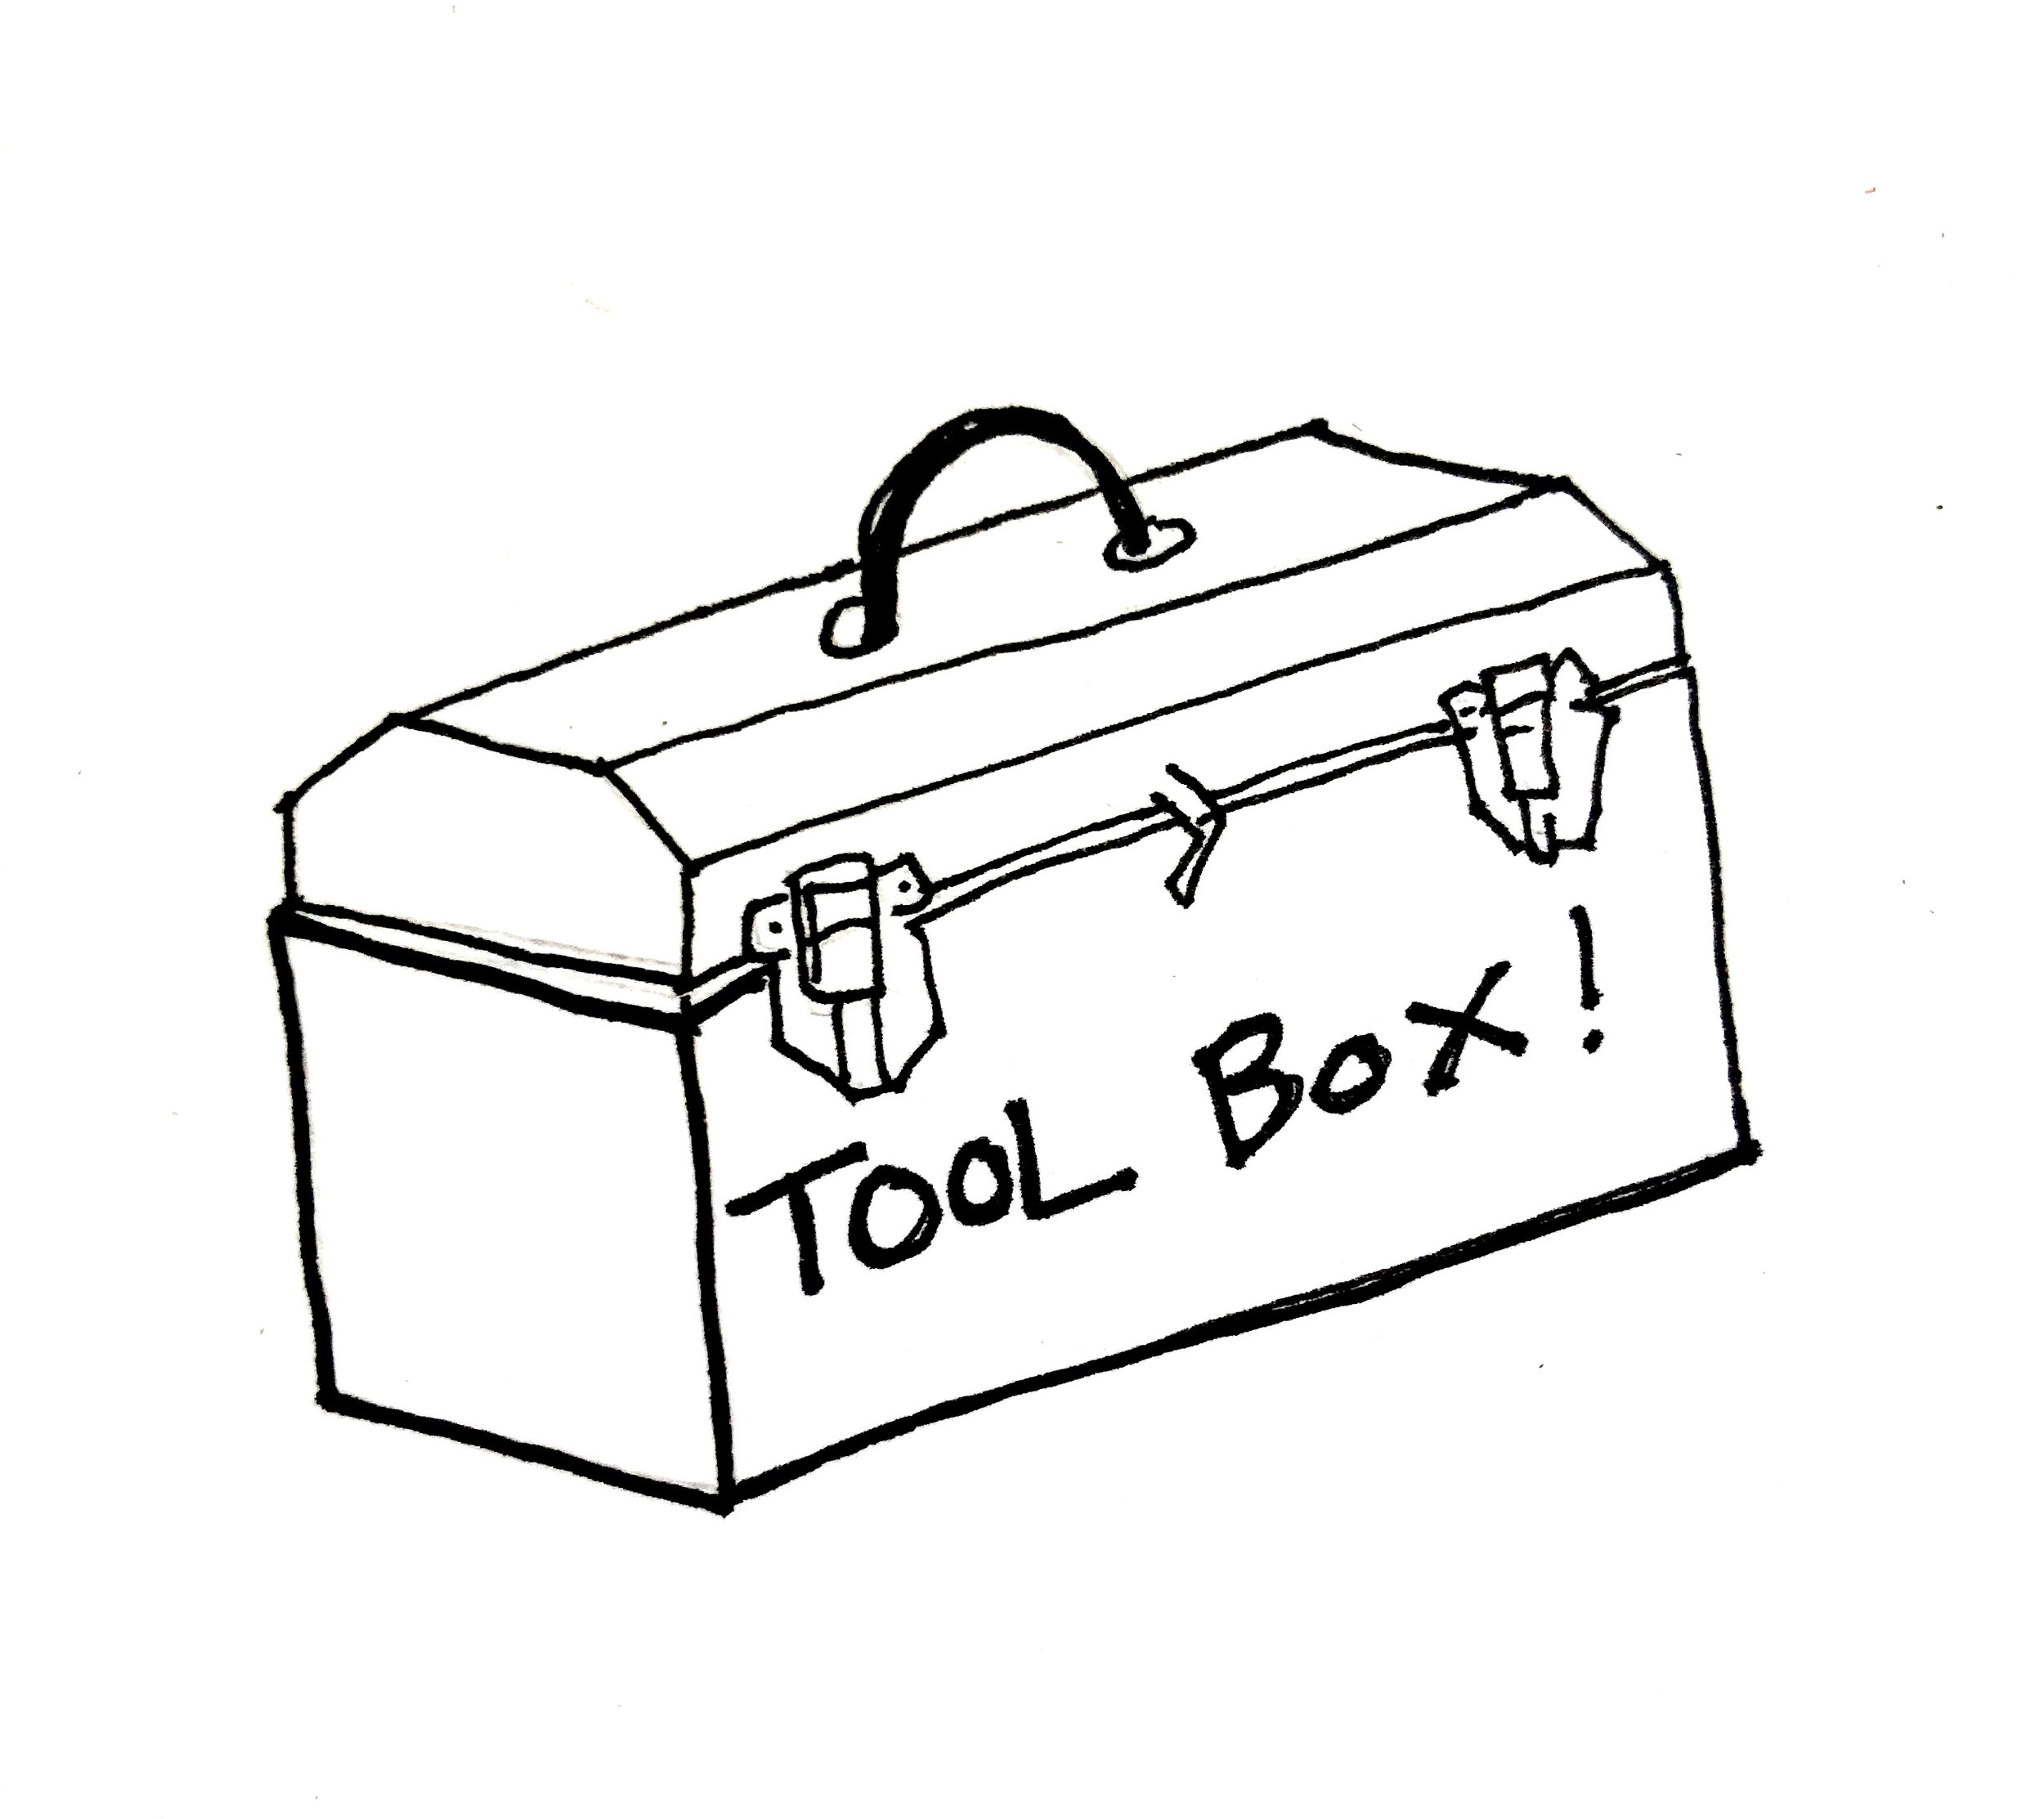 Tool box — Stove Works